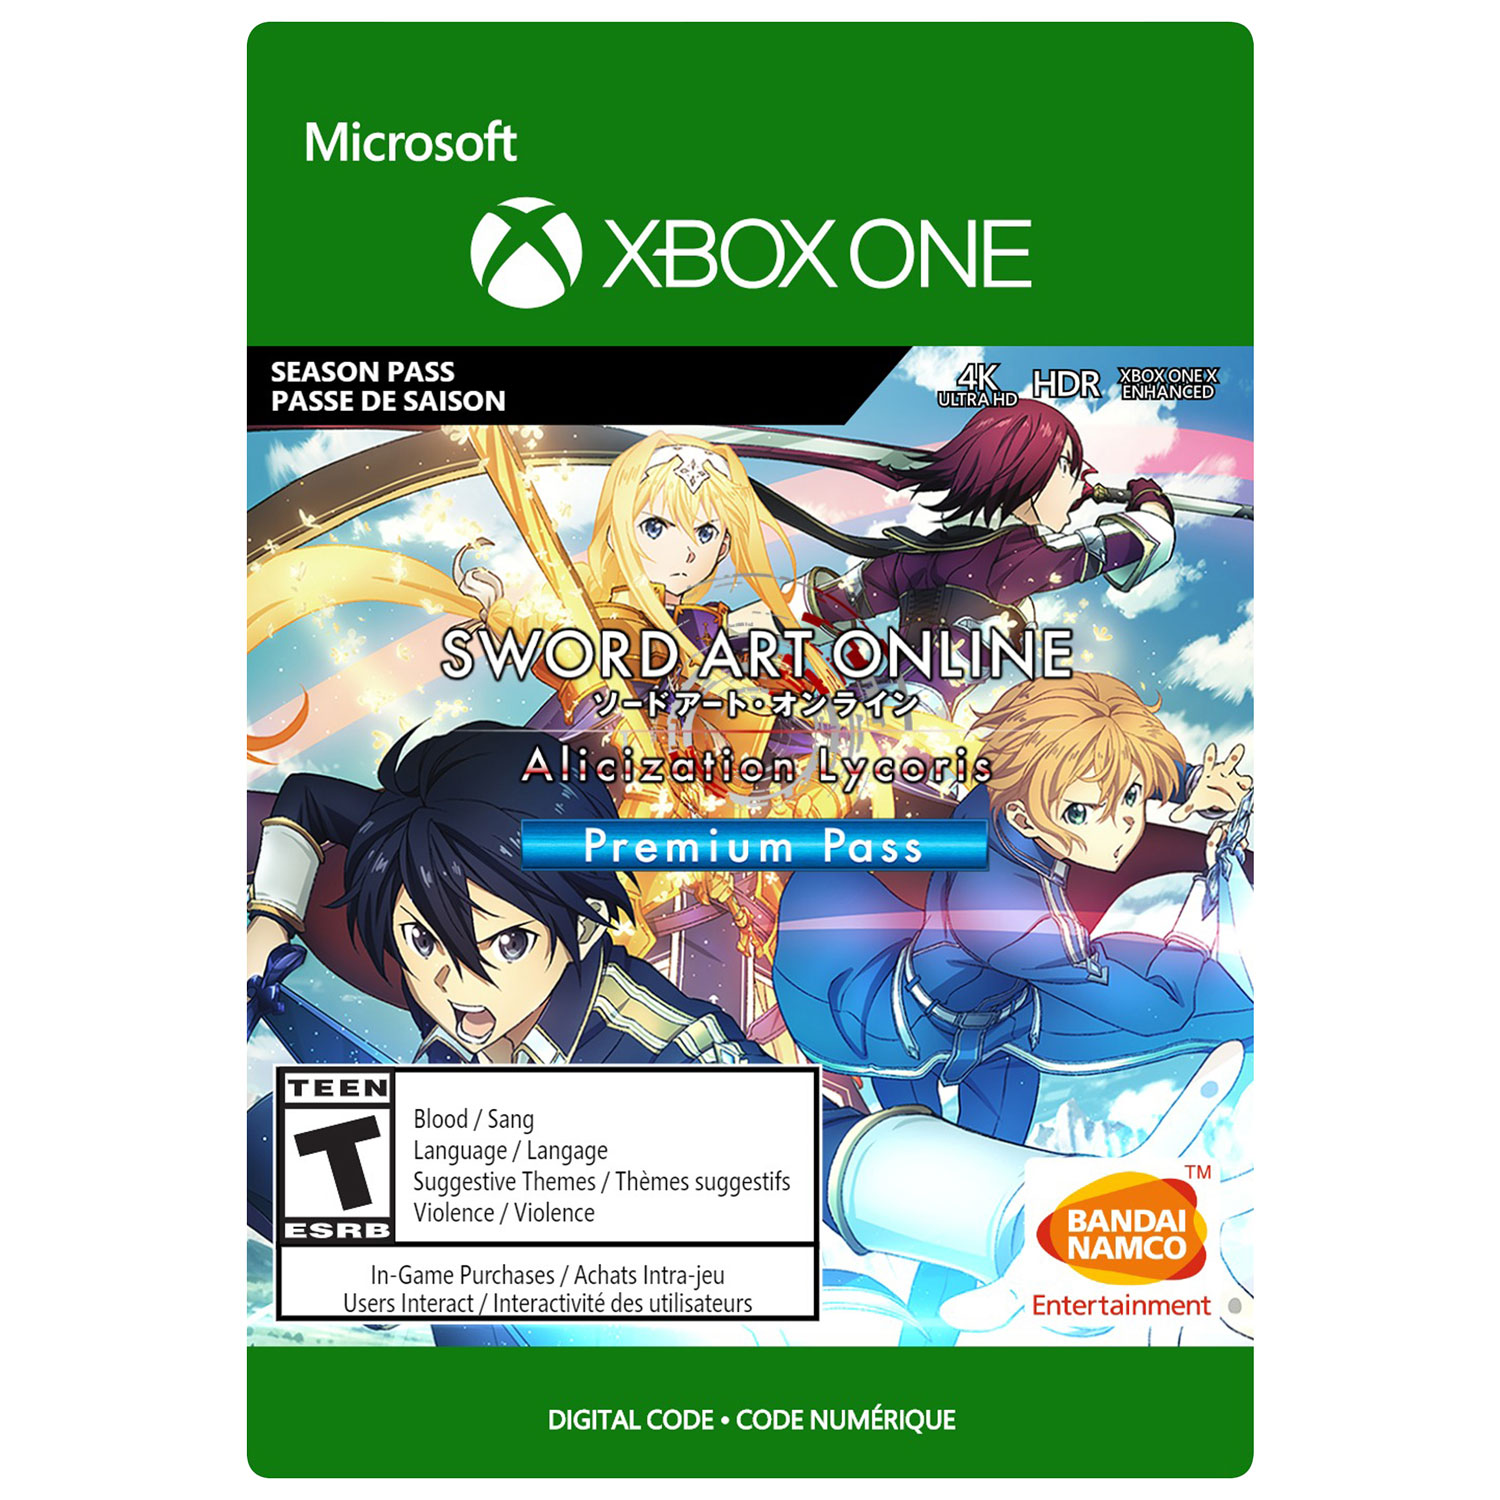 Sword Art Online: Alicization Lycoris Premium Pass (Xbox One) - Digital Download